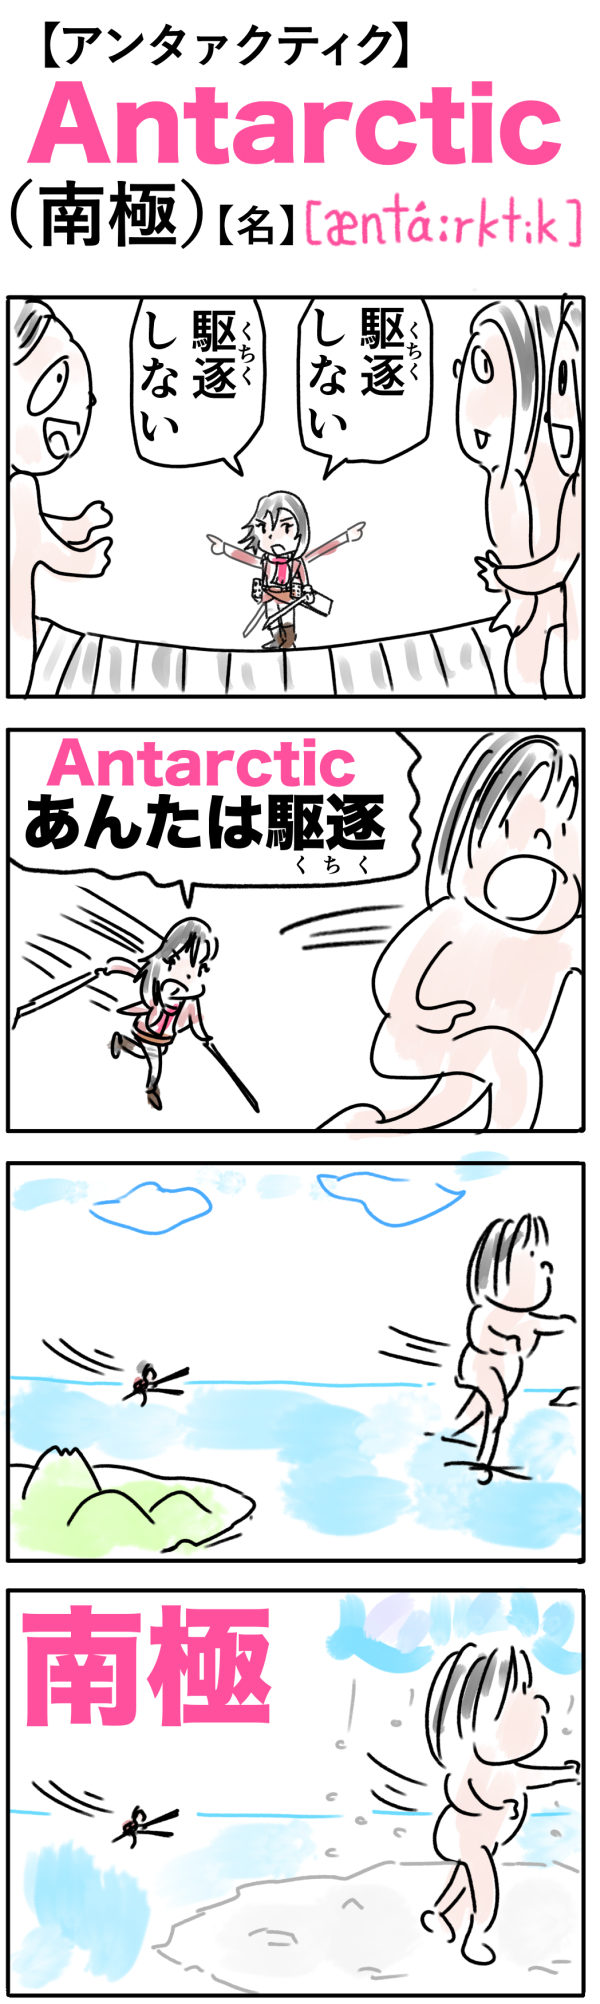 Antarctic（南極）の語呂合わせ英単語